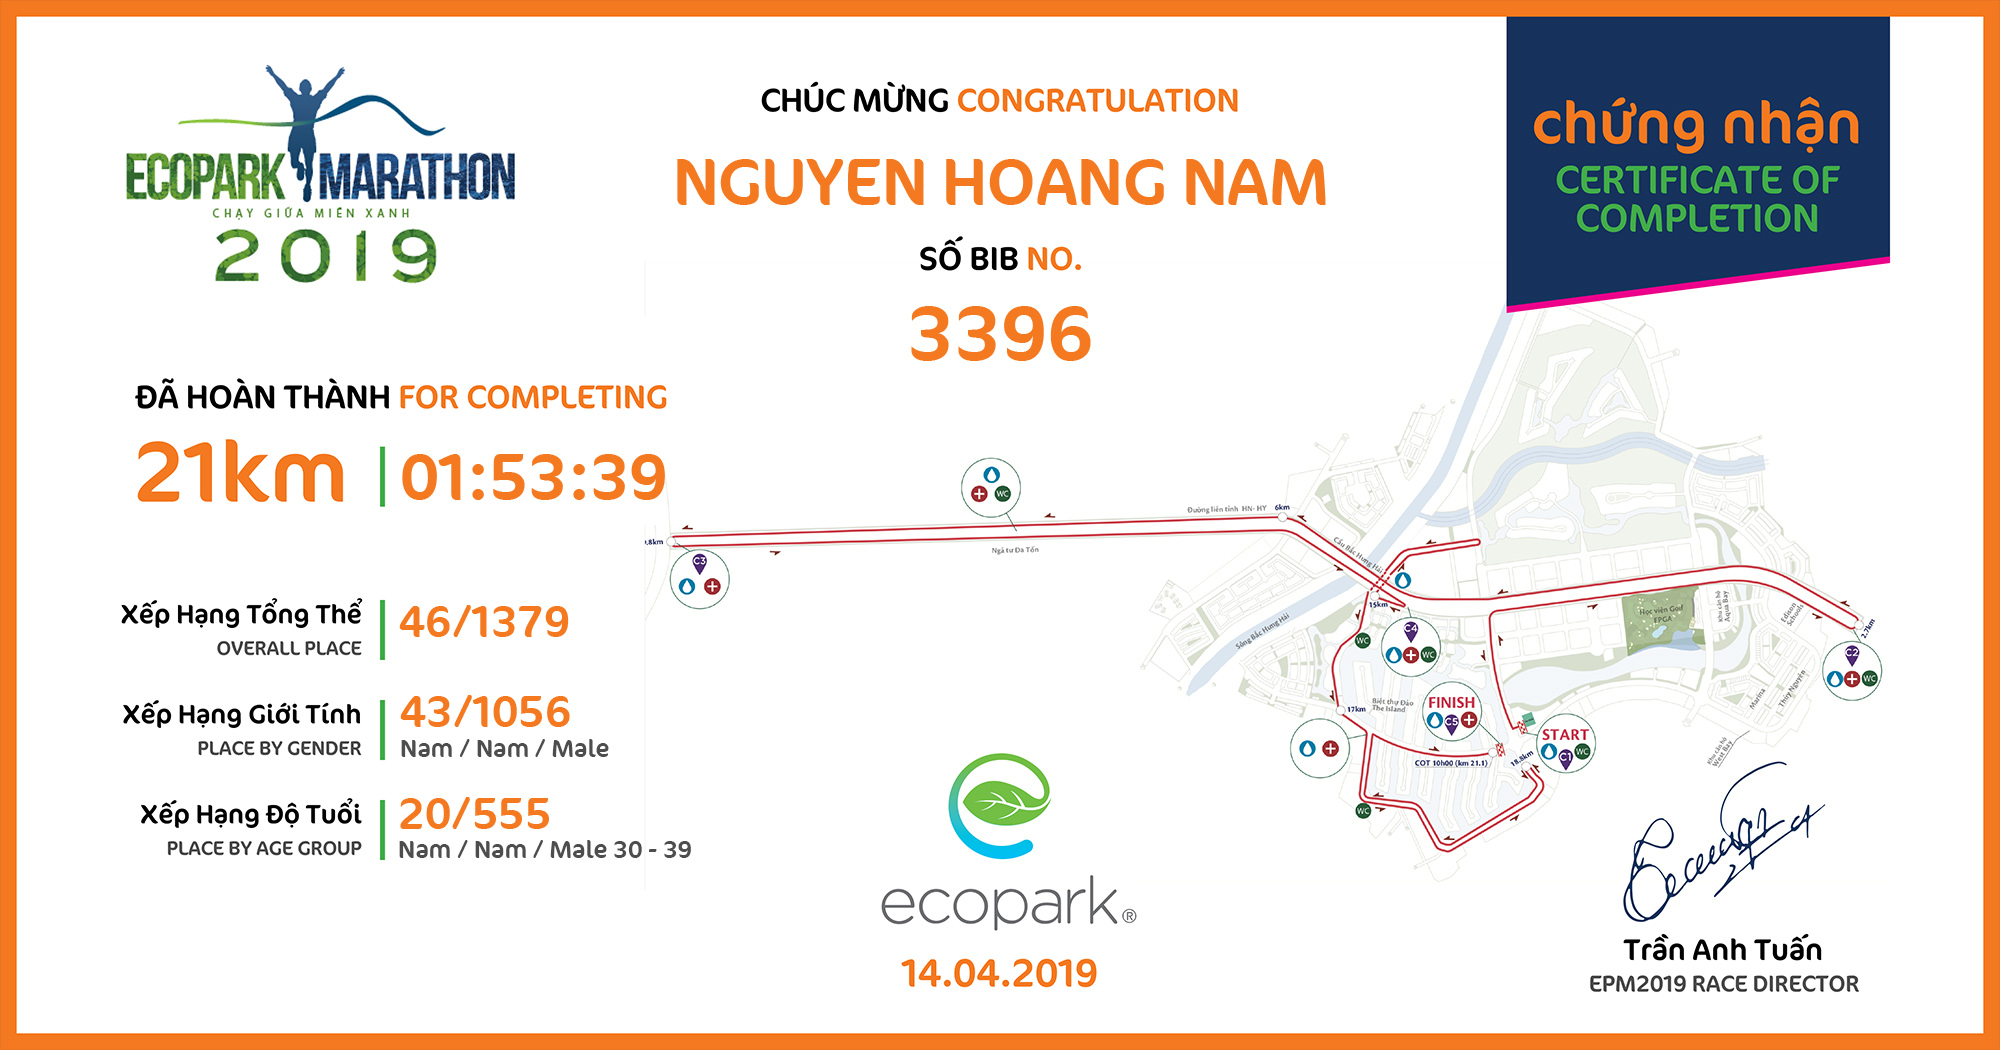 3396 - Nguyen Hoang Nam